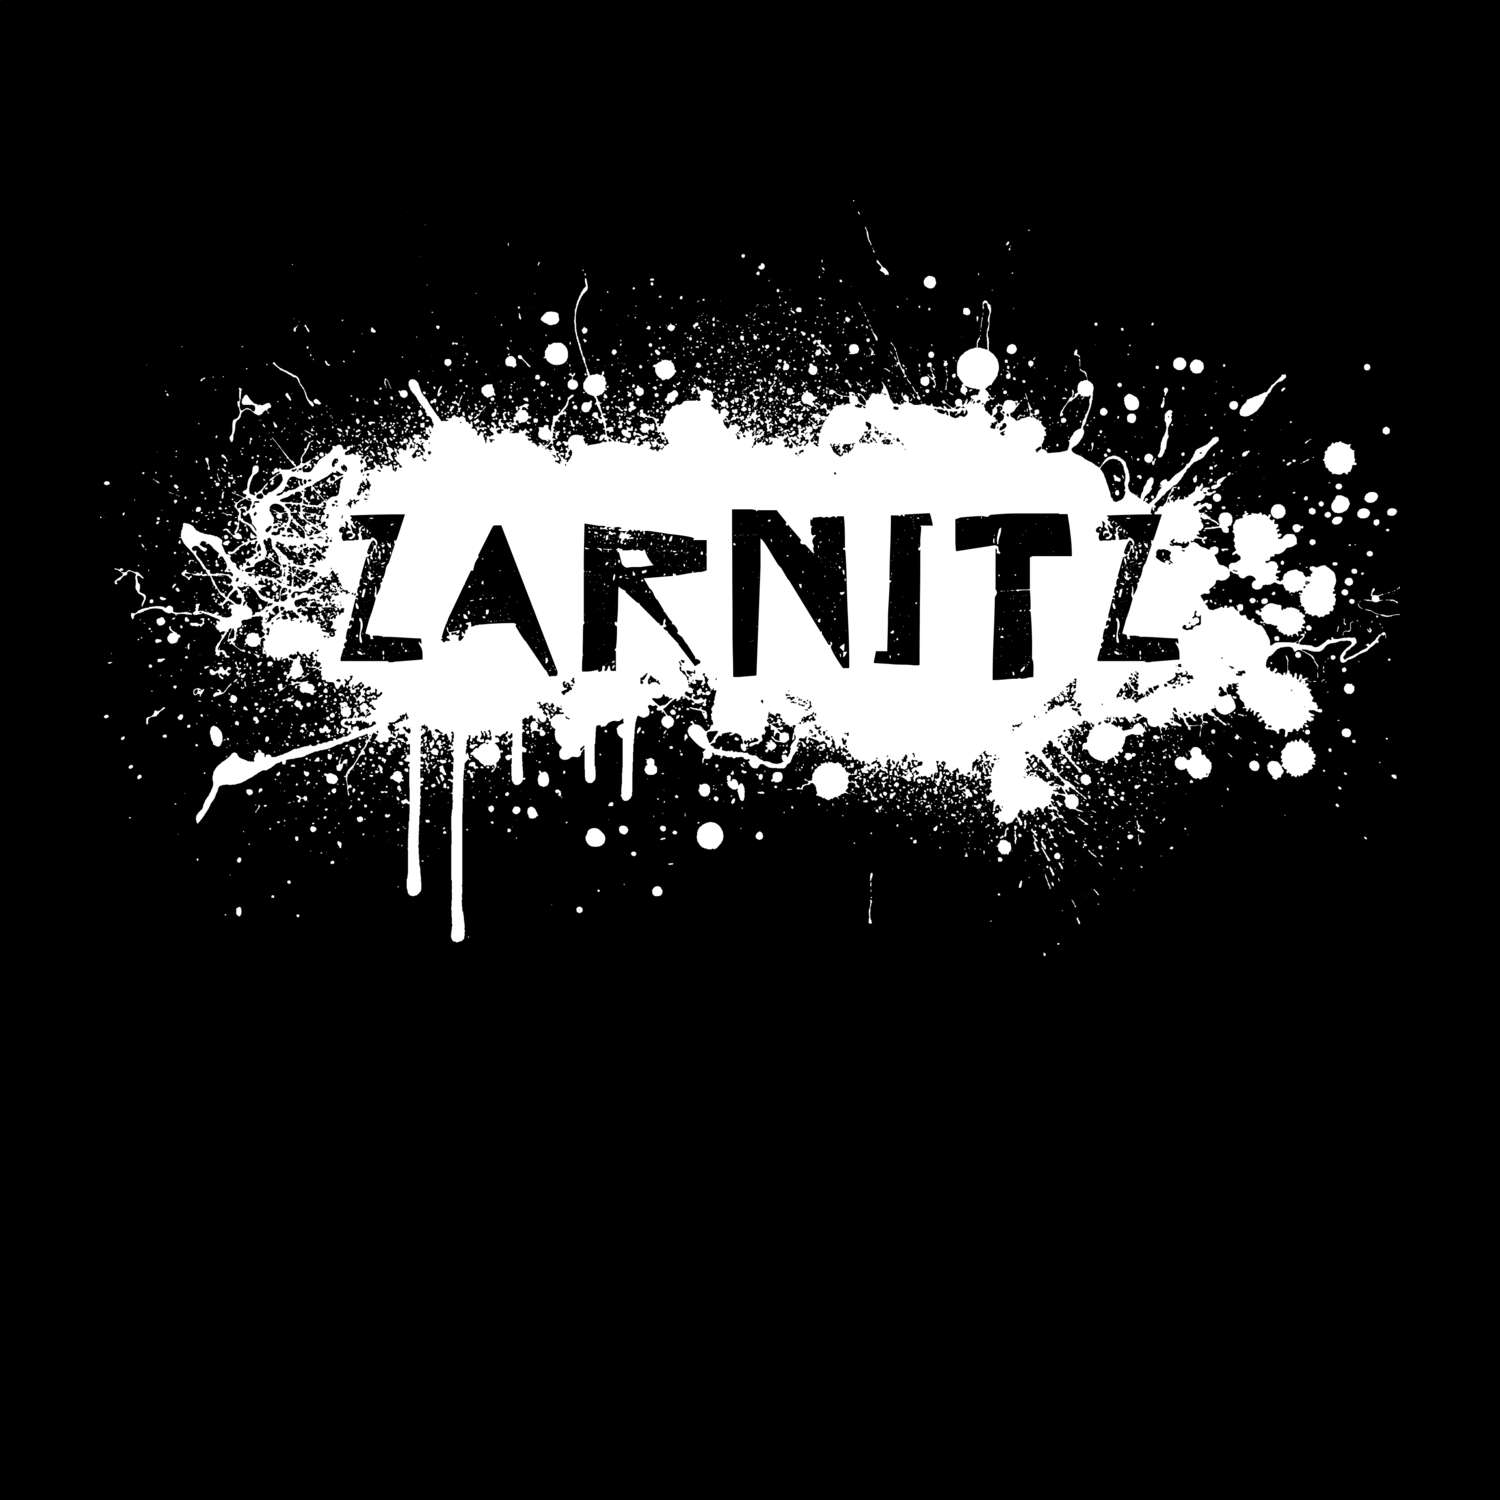 Zarnitz T-Shirt »Paint Splash Punk«